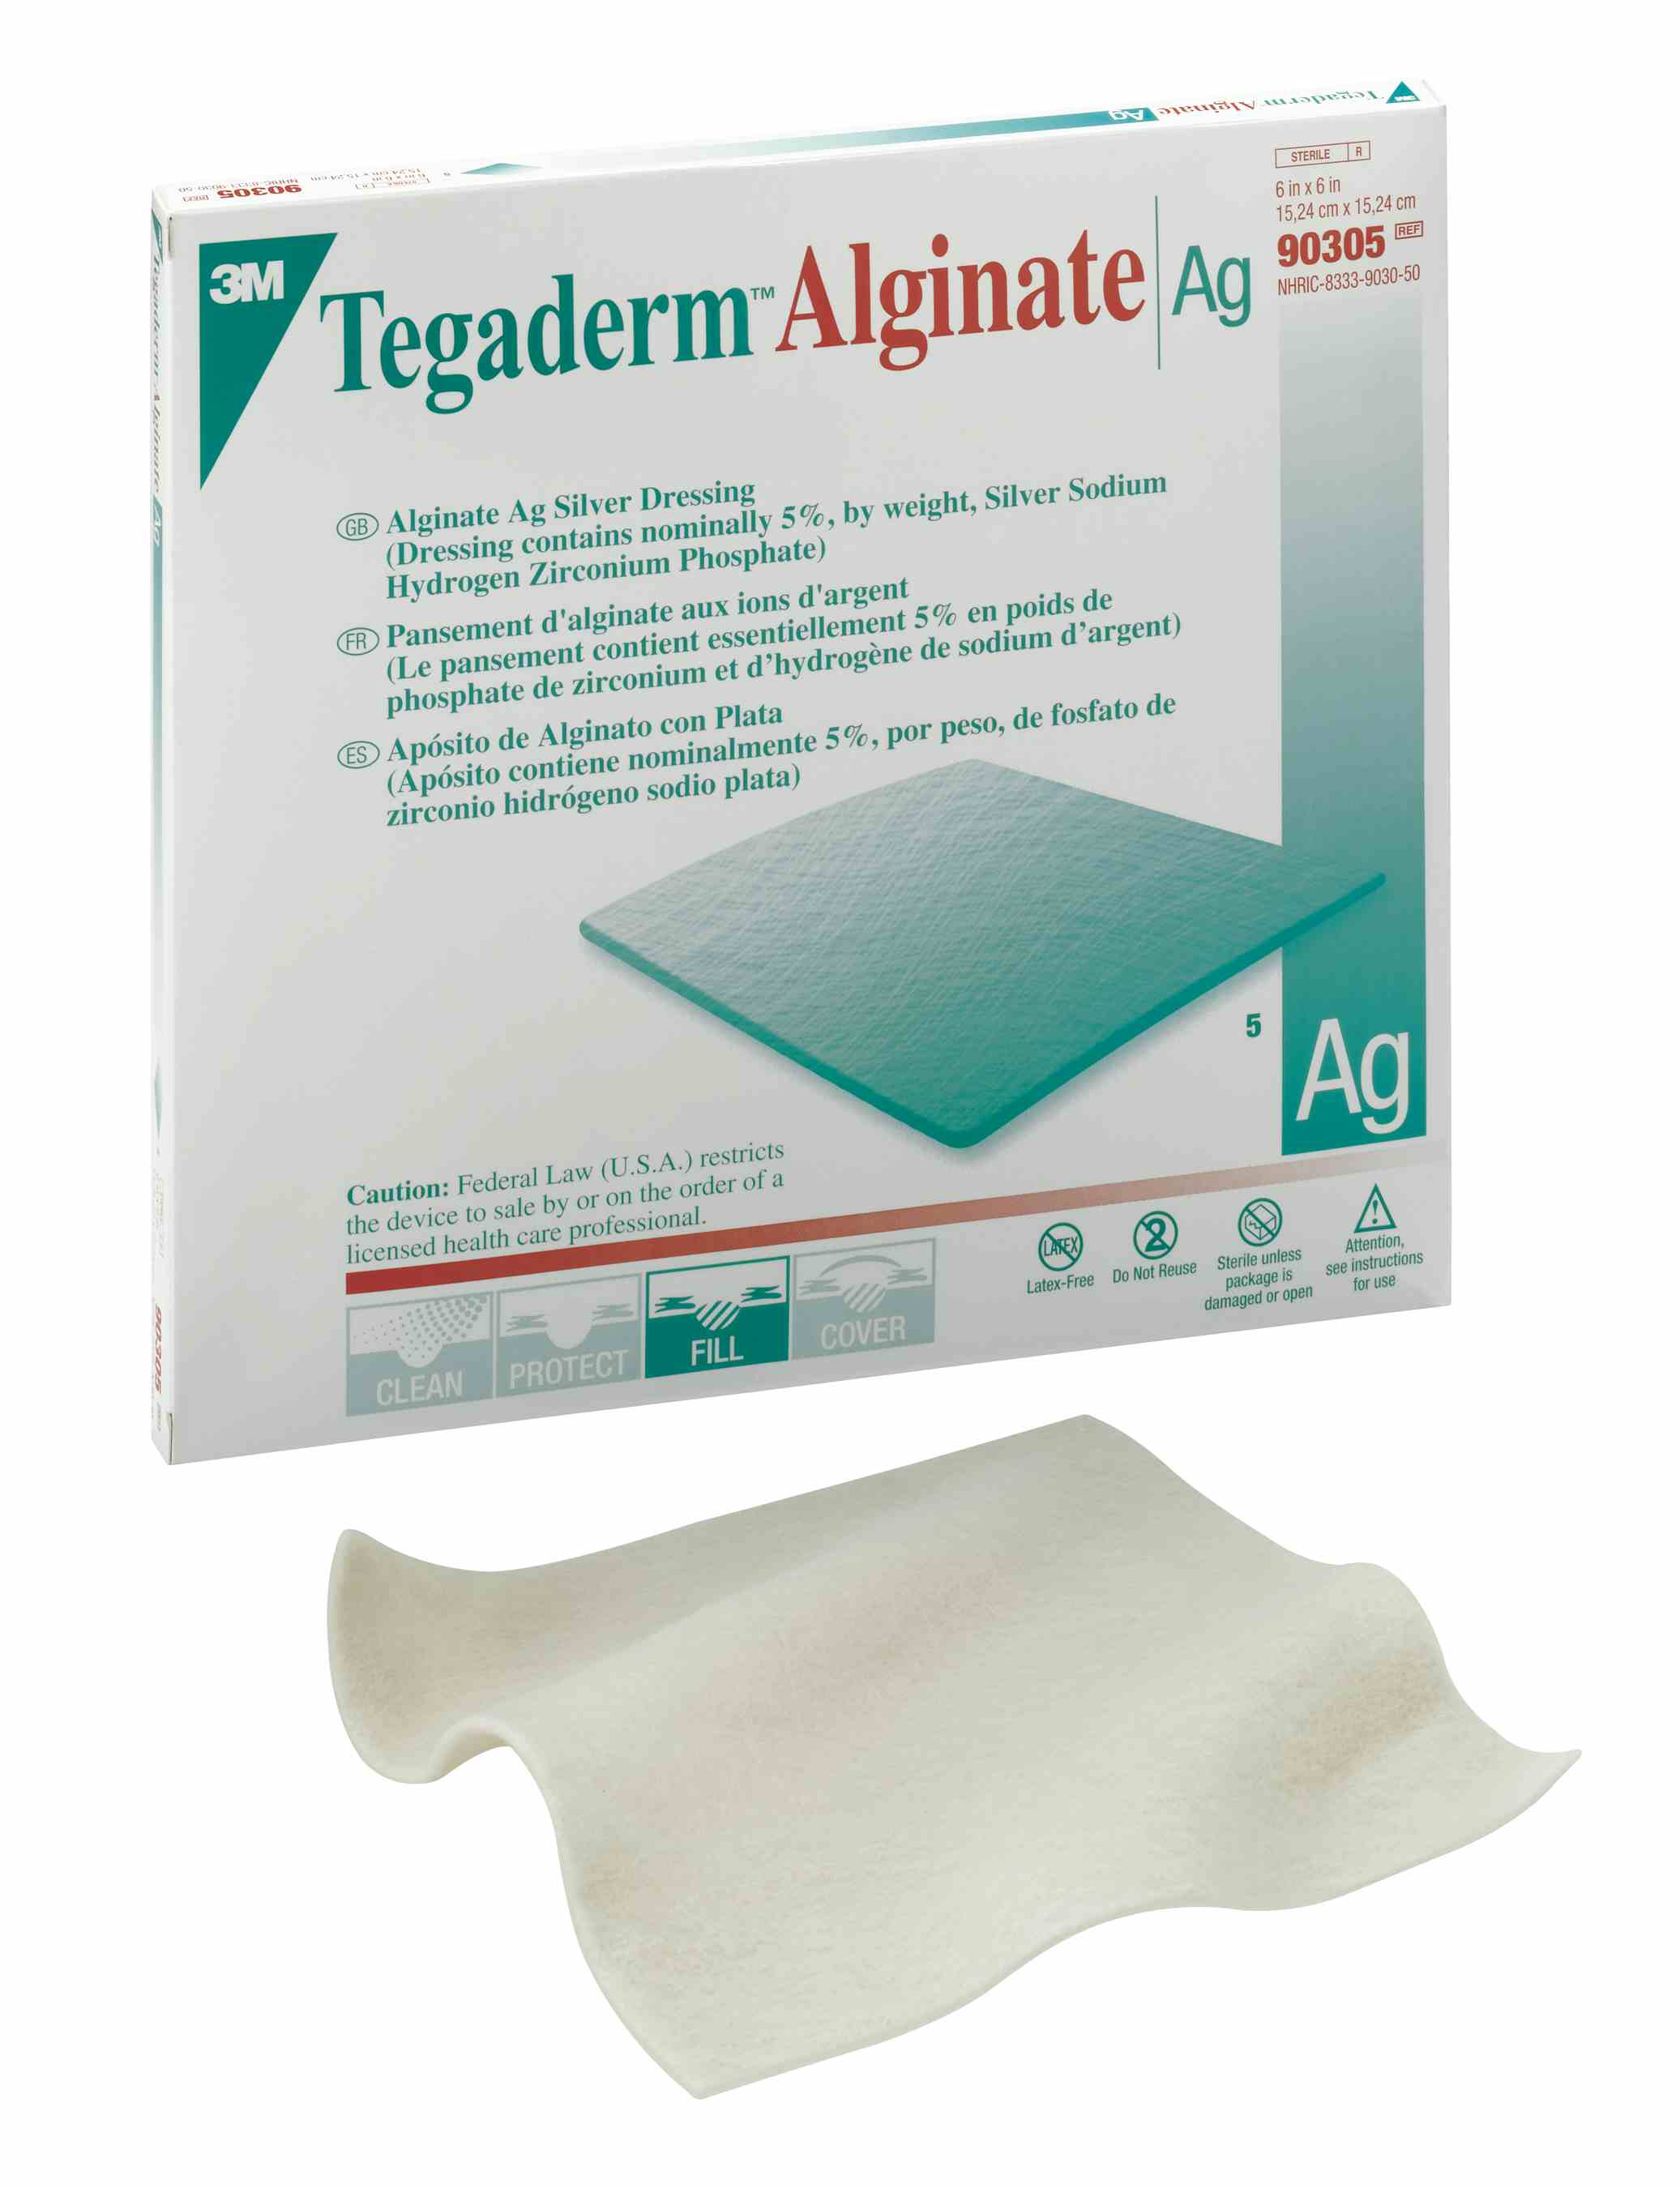 3M Tegaderm Alginate Ag Silver Dressing, 6 X 6", 90305, Box of 5